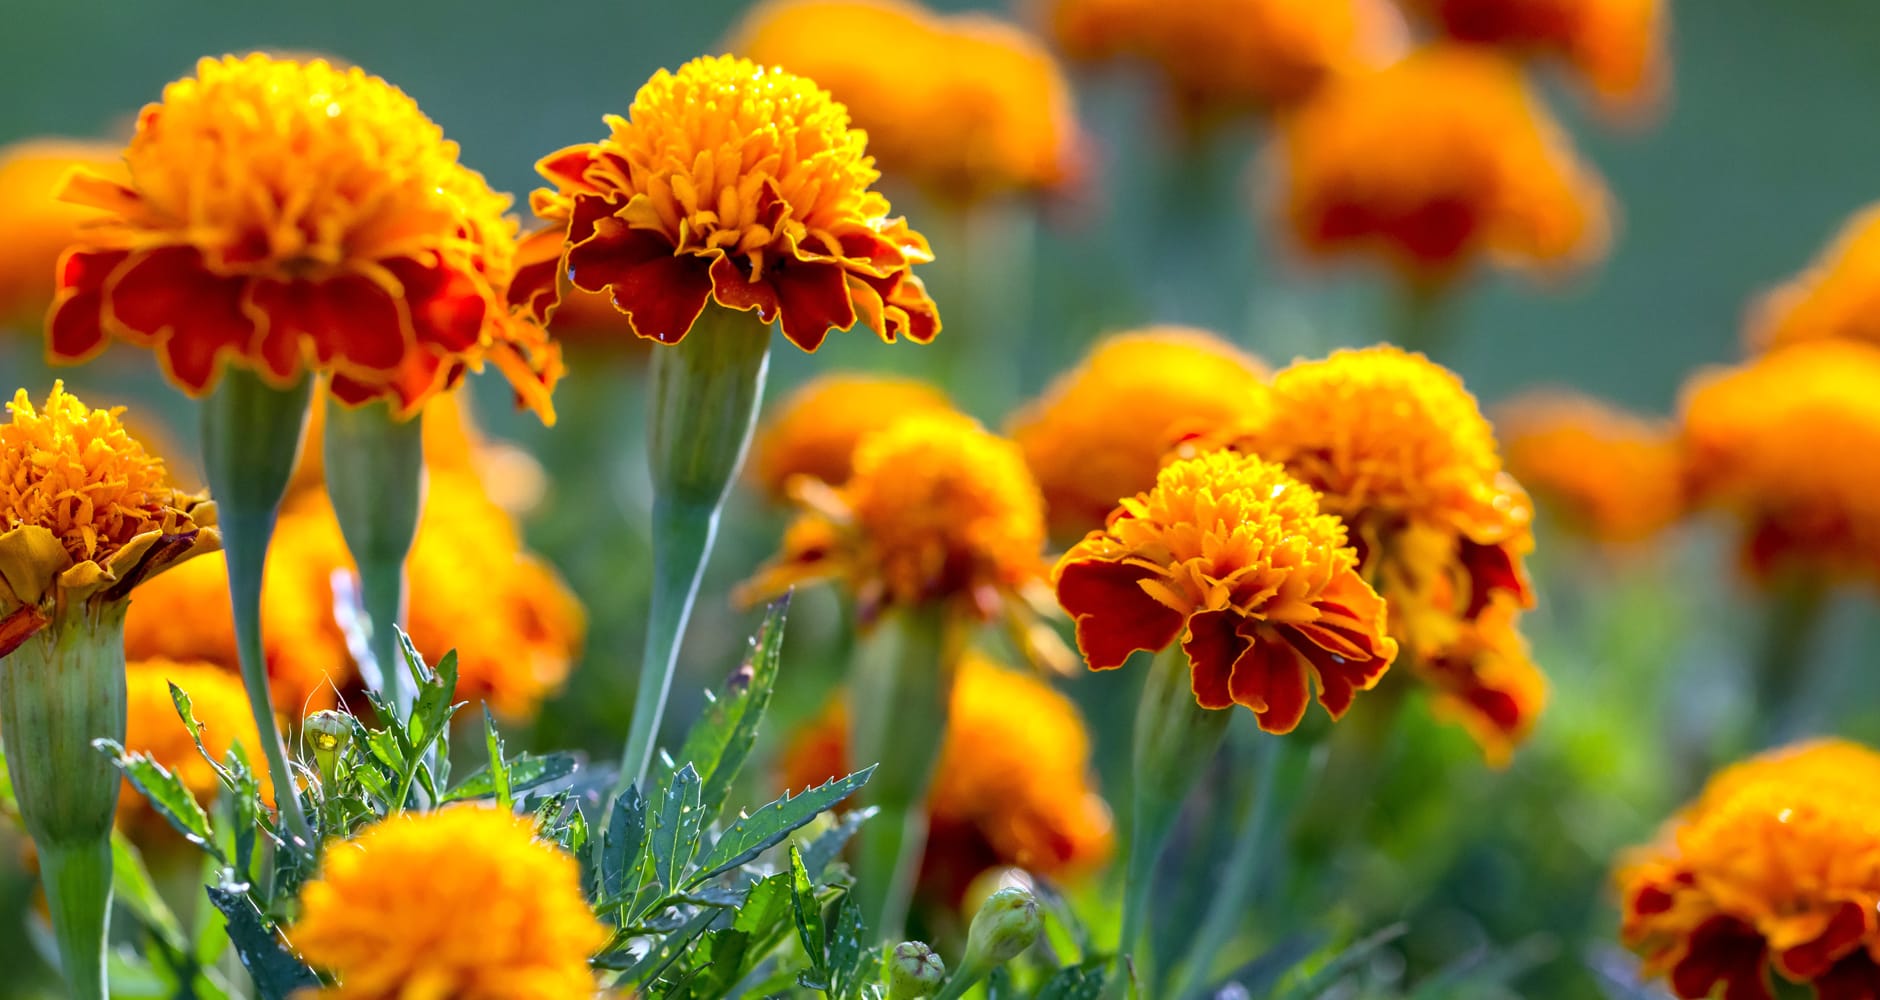 edible flowers - marigold